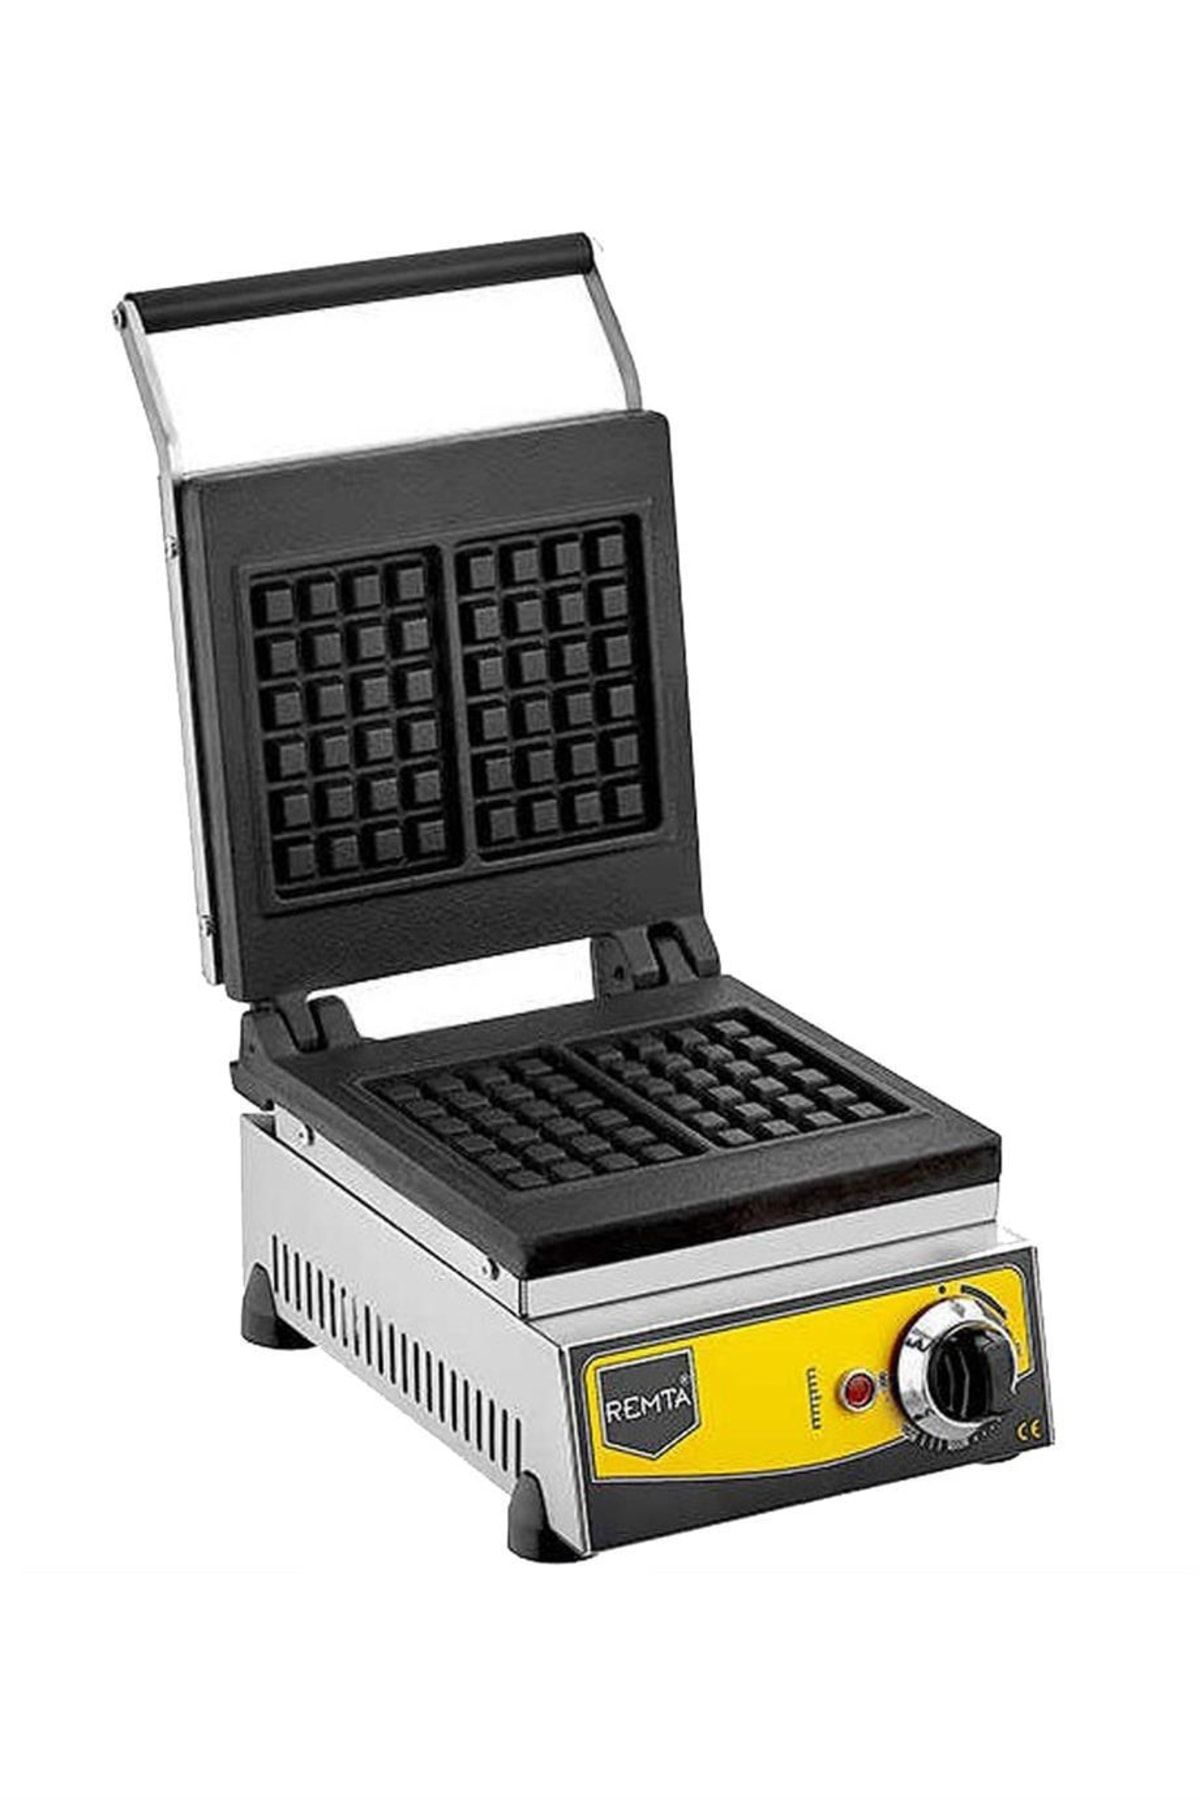 Remta W10 Tekli Kare Model Waffle Makinesi